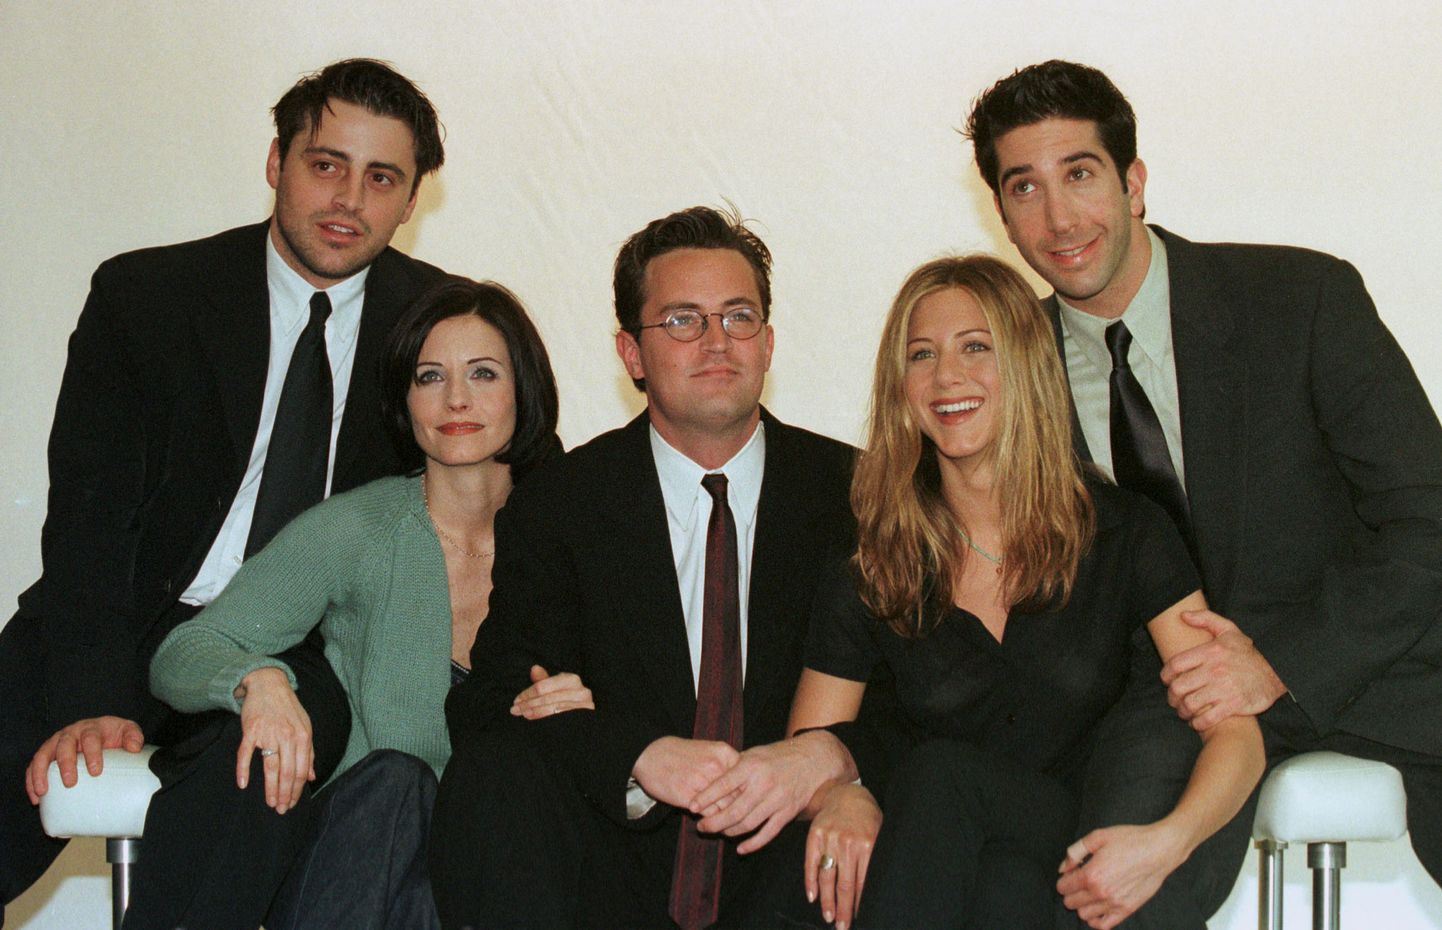 Каст сериала «Друзья»: Мэтт Лэ Бланк, Кортни Кокс, Мэтью Перри, Дженифер Энистон и Девид Швиммер -1998 год.